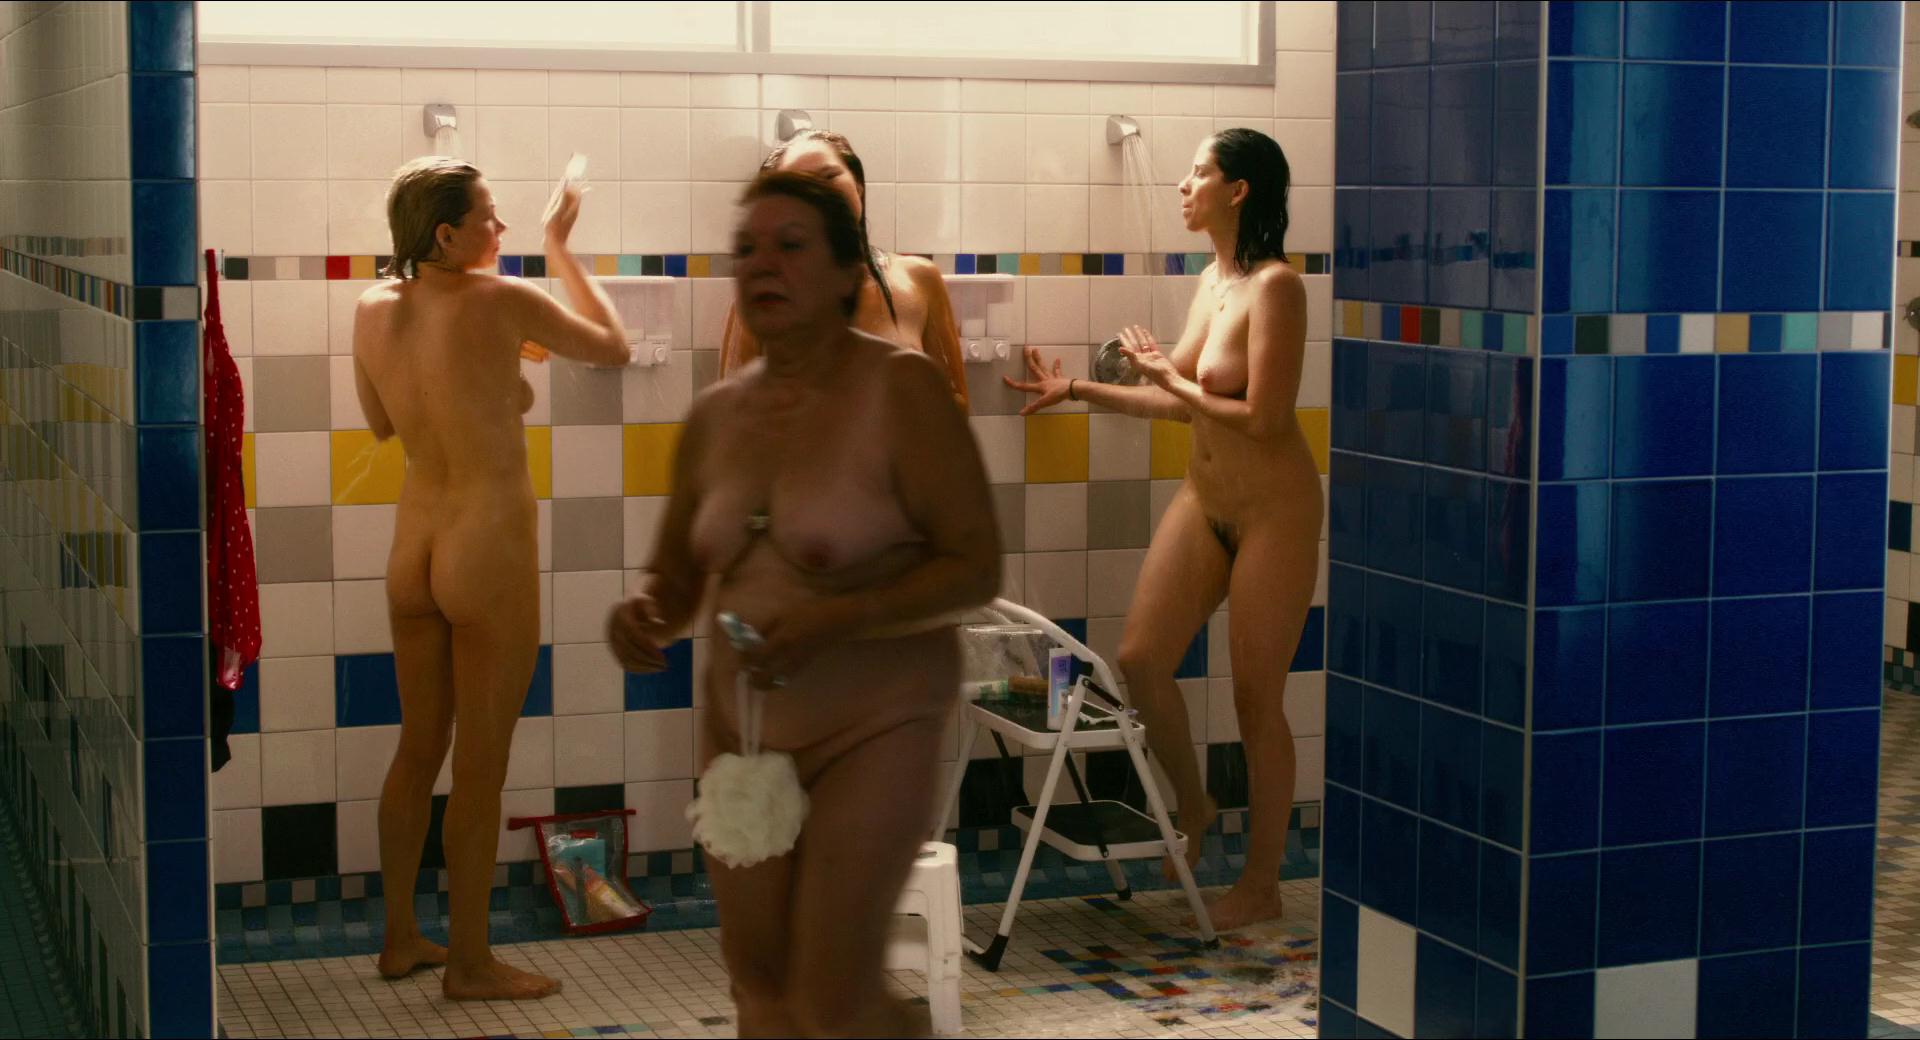 Дженнифер Podemski nude pics.